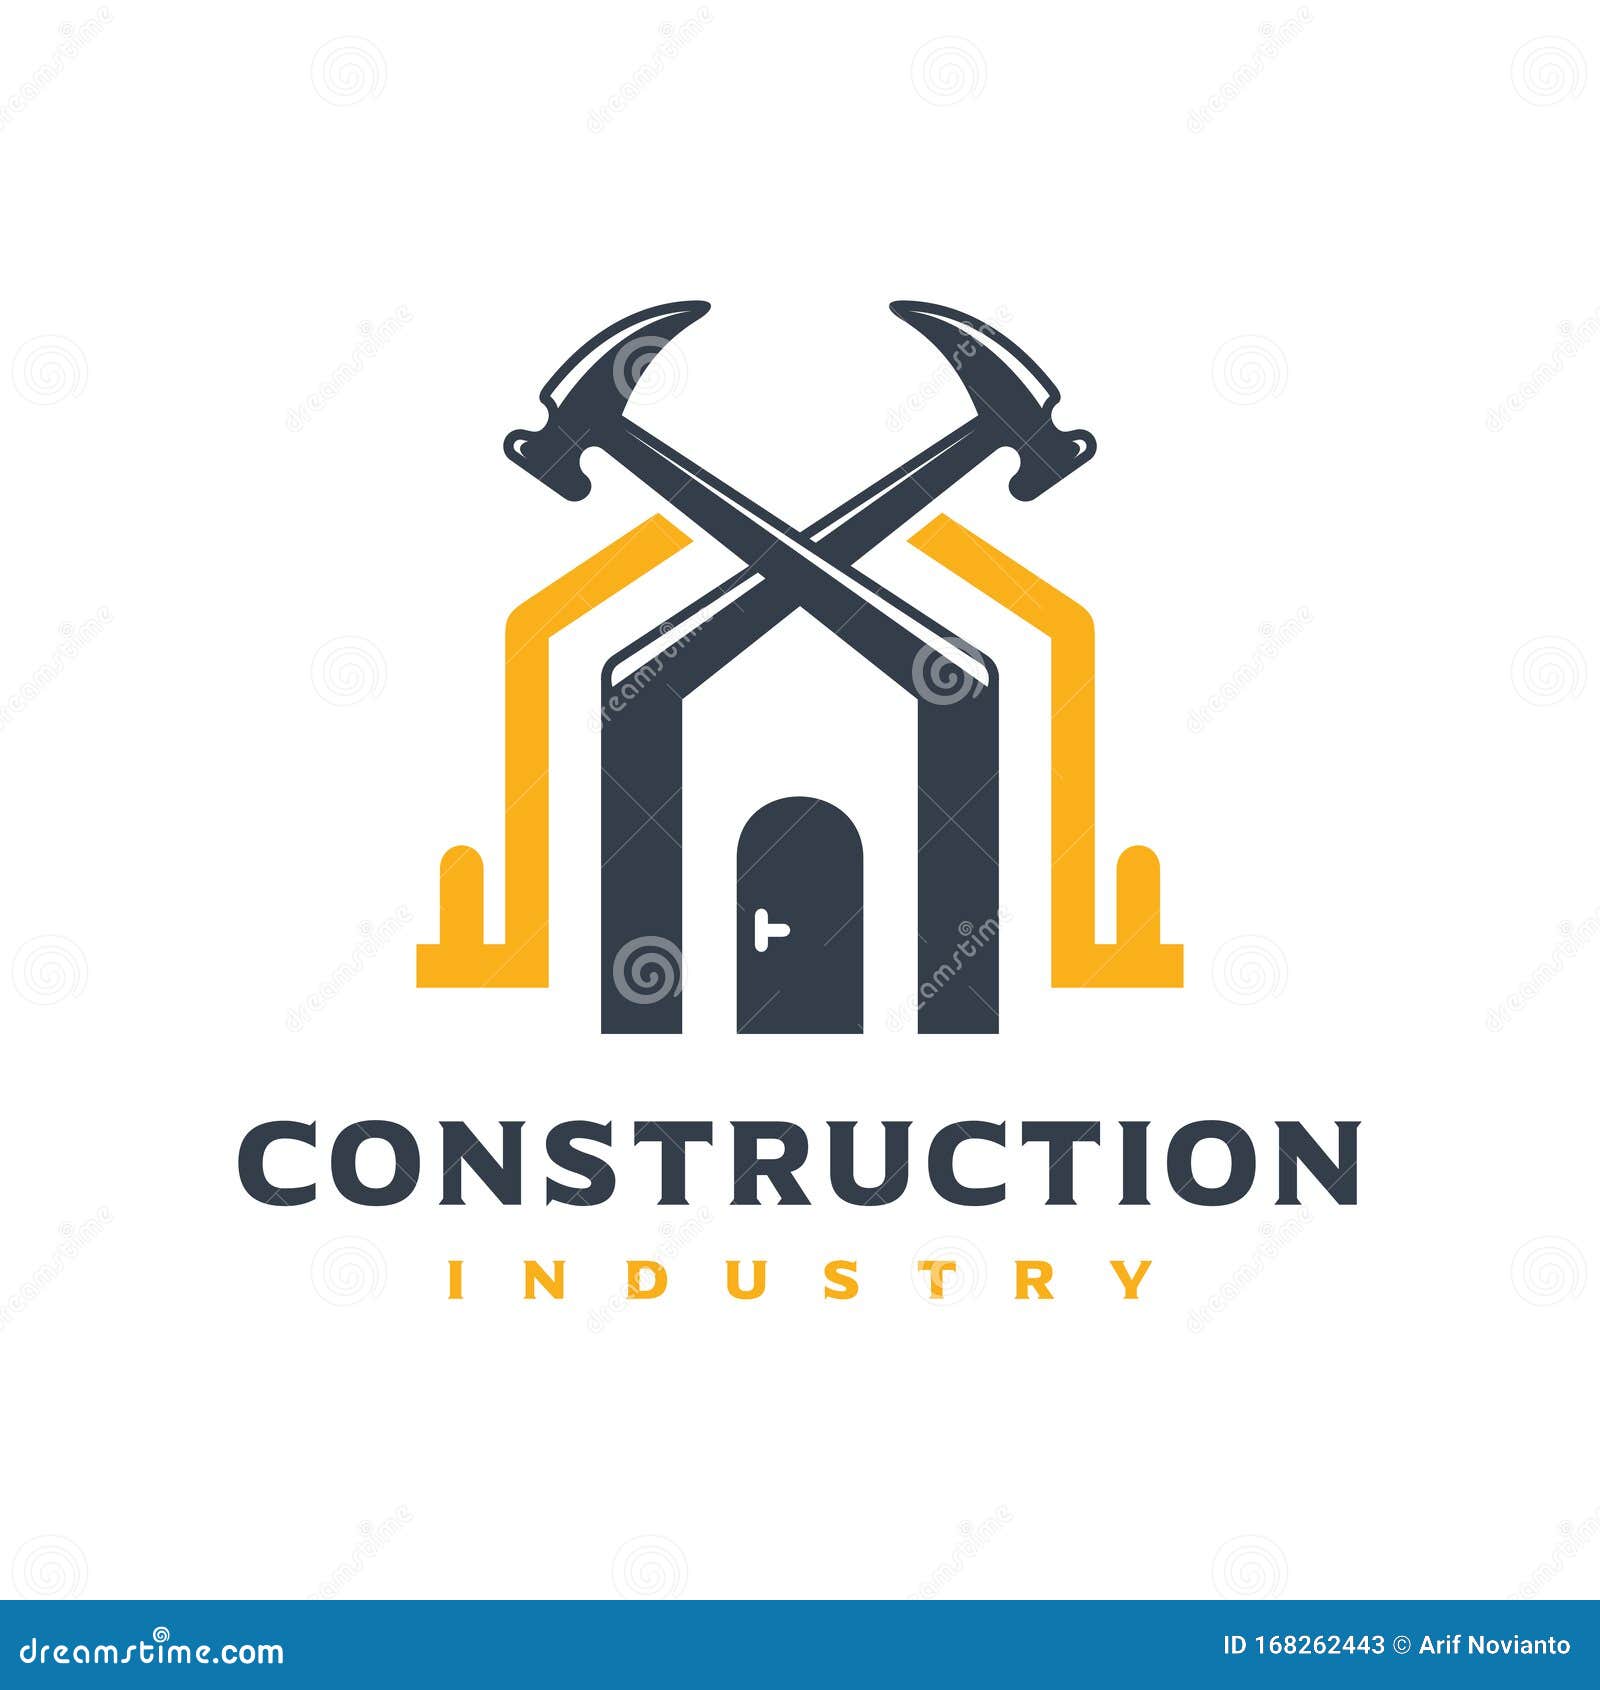 Home building logo design stock illustration. Illustration of cityscape ...